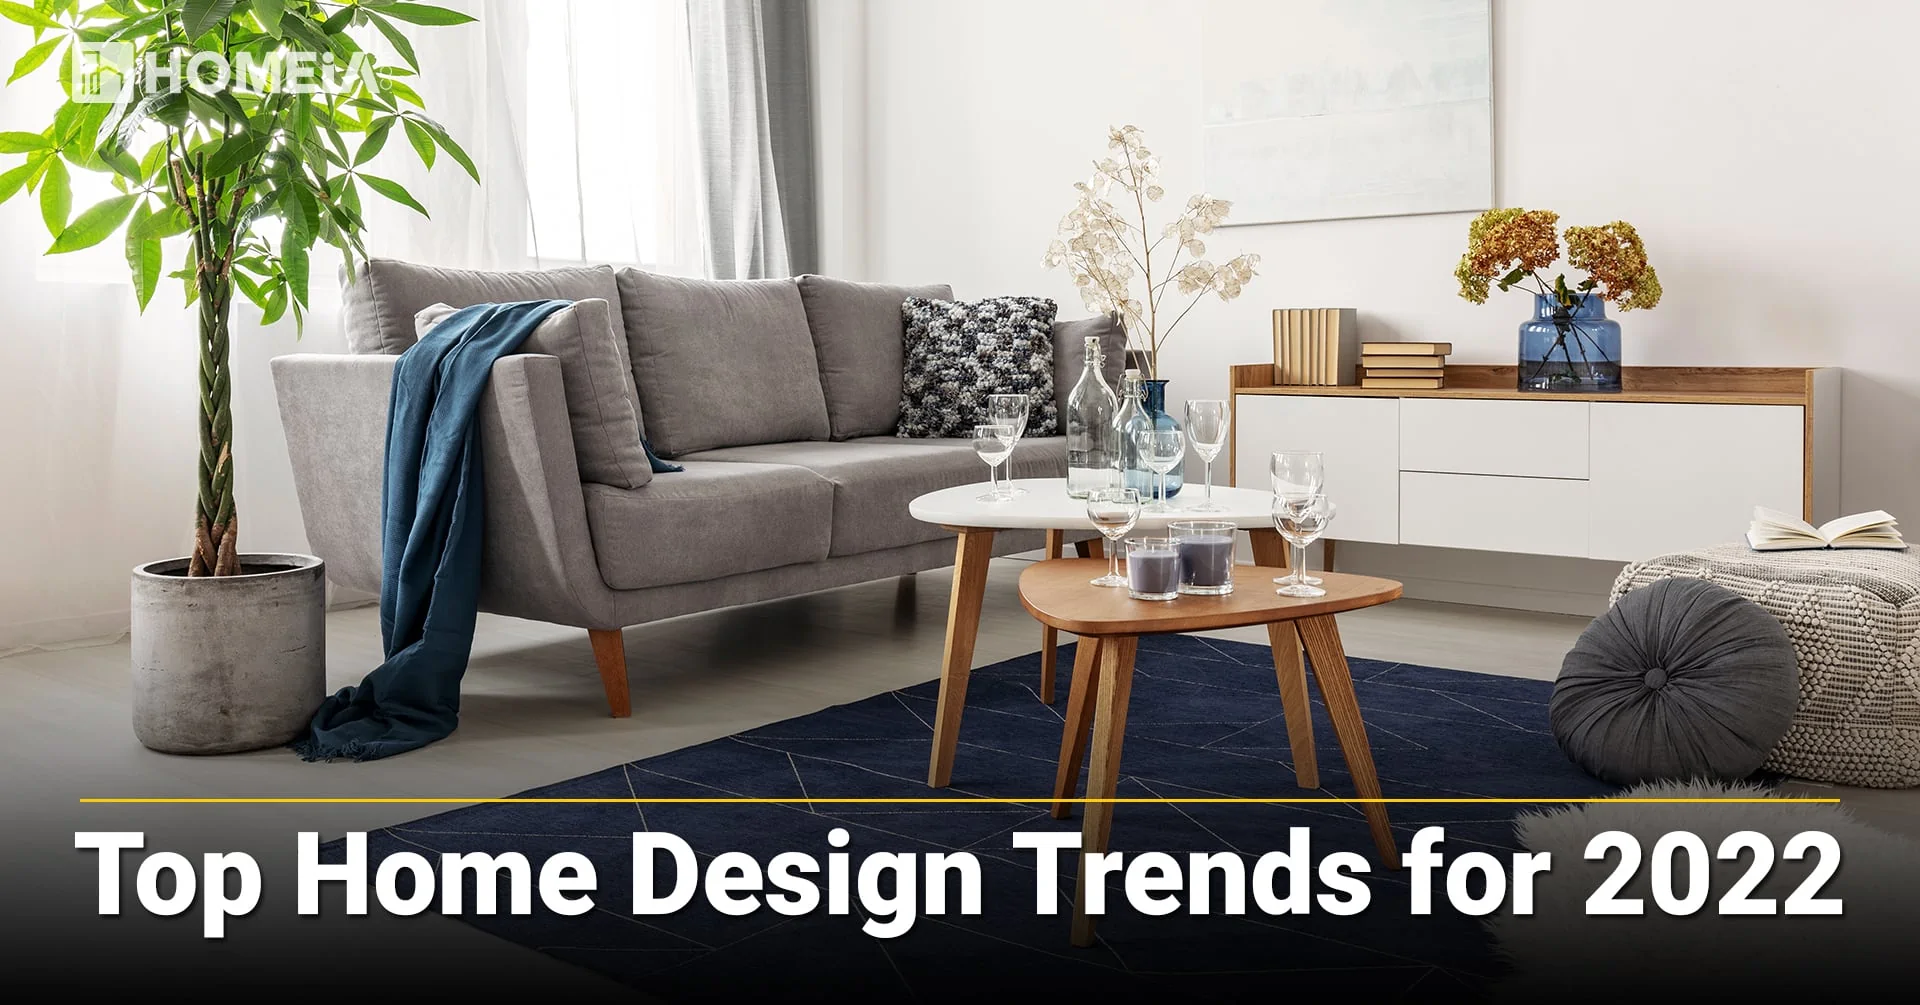 Top 3 Home Design Trends